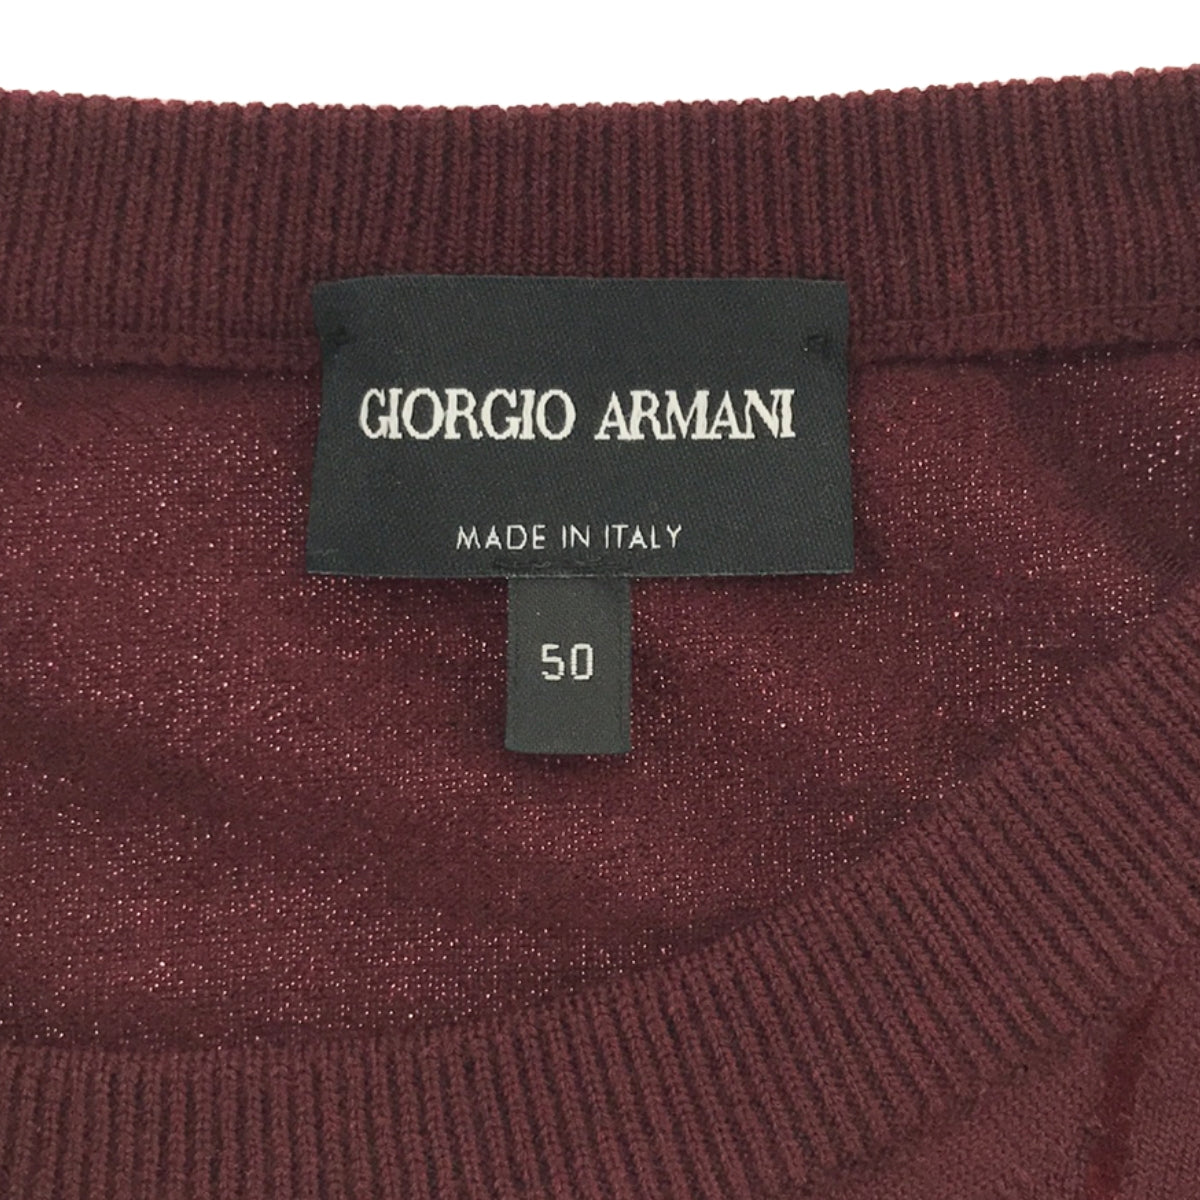 GIORGIO ARMANI / ジョルジオアルマーニ | ウール混 ベロアテープ 格子柄 クルーネックニット | 50 | メンズ